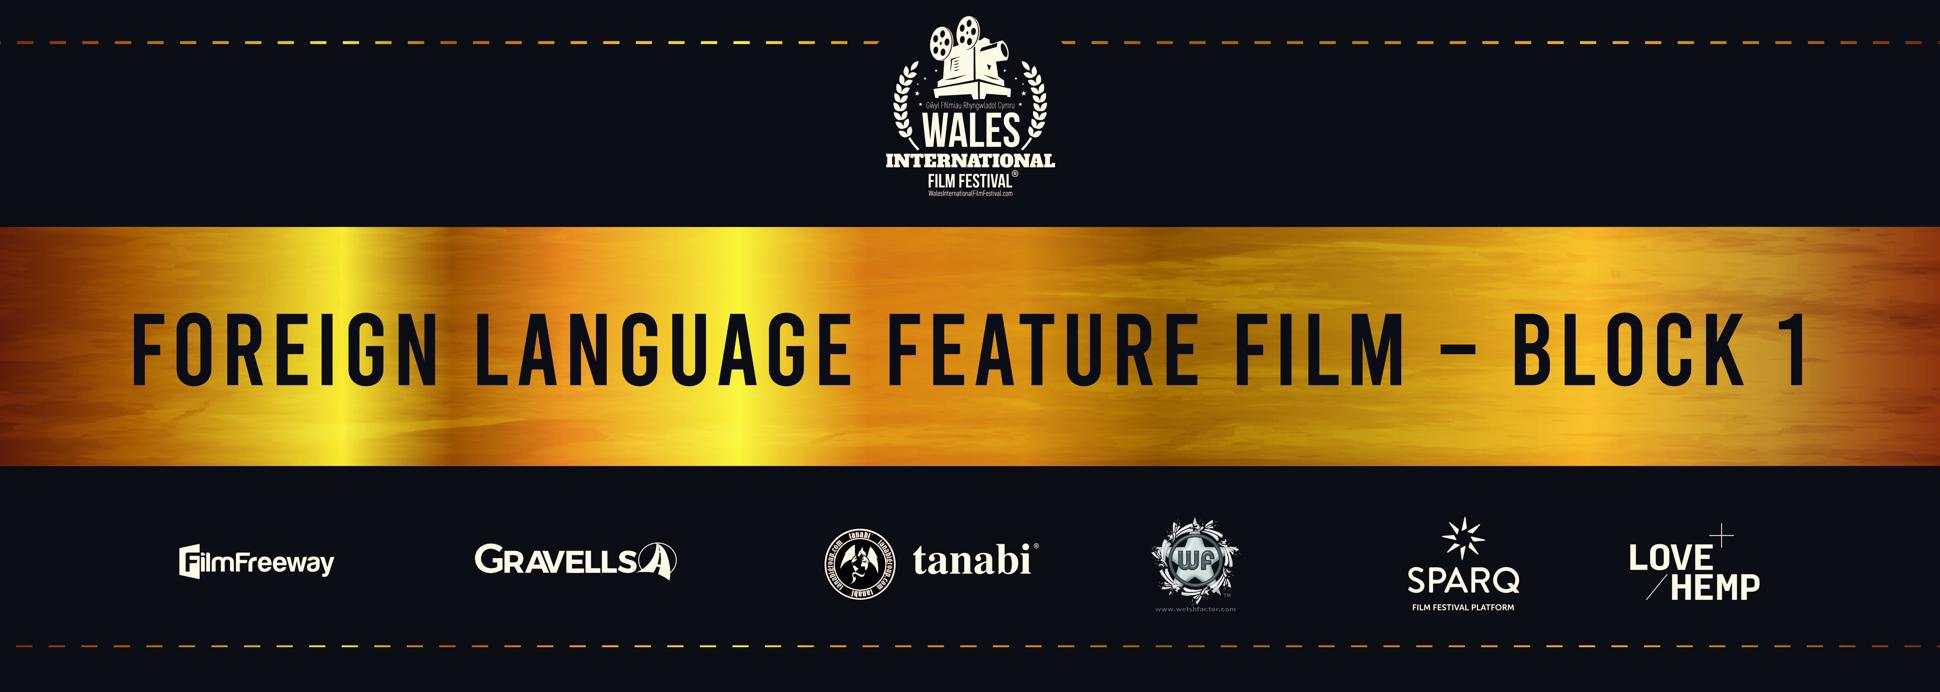 Foreign Language Feature Film - Block 1